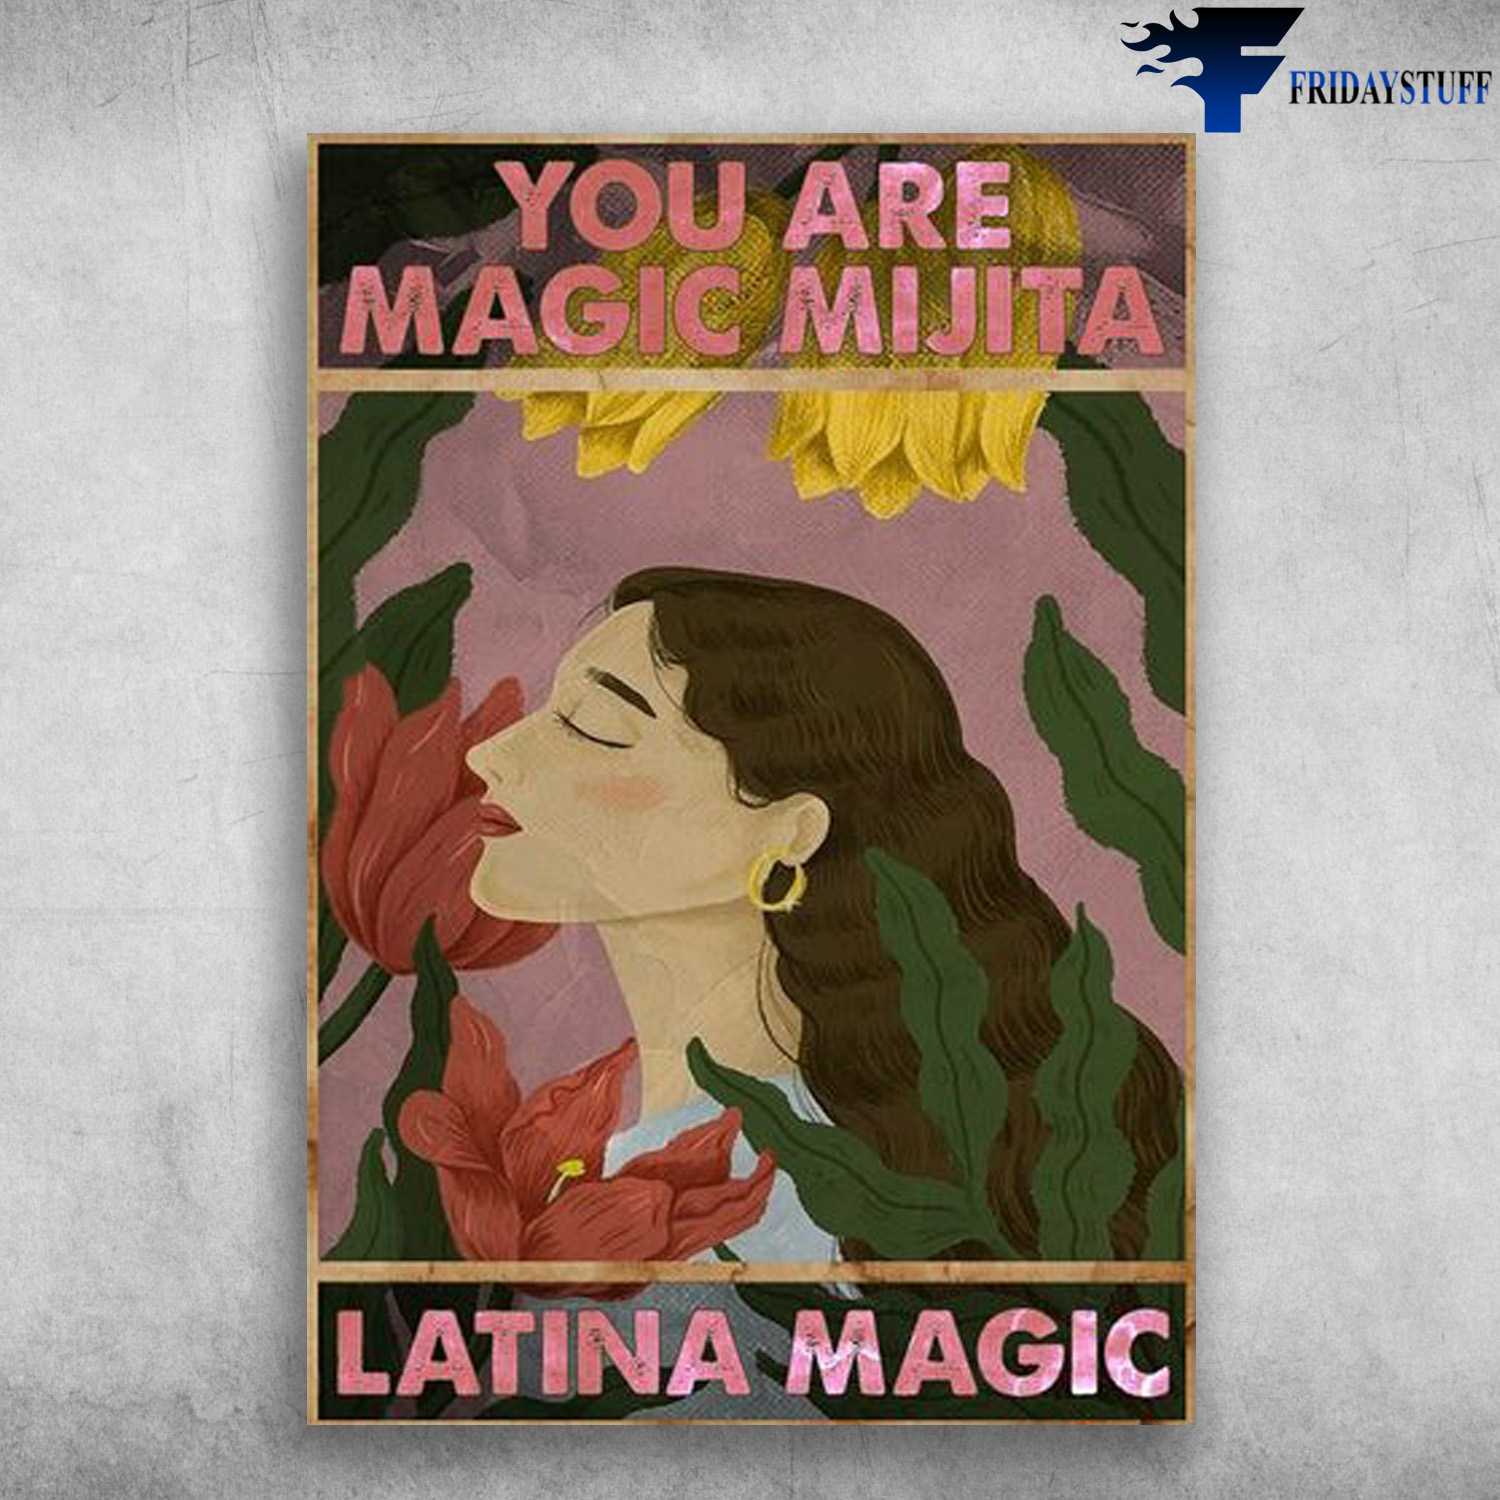 Girl Flower - You Are Magic Mijita, Latina Magic